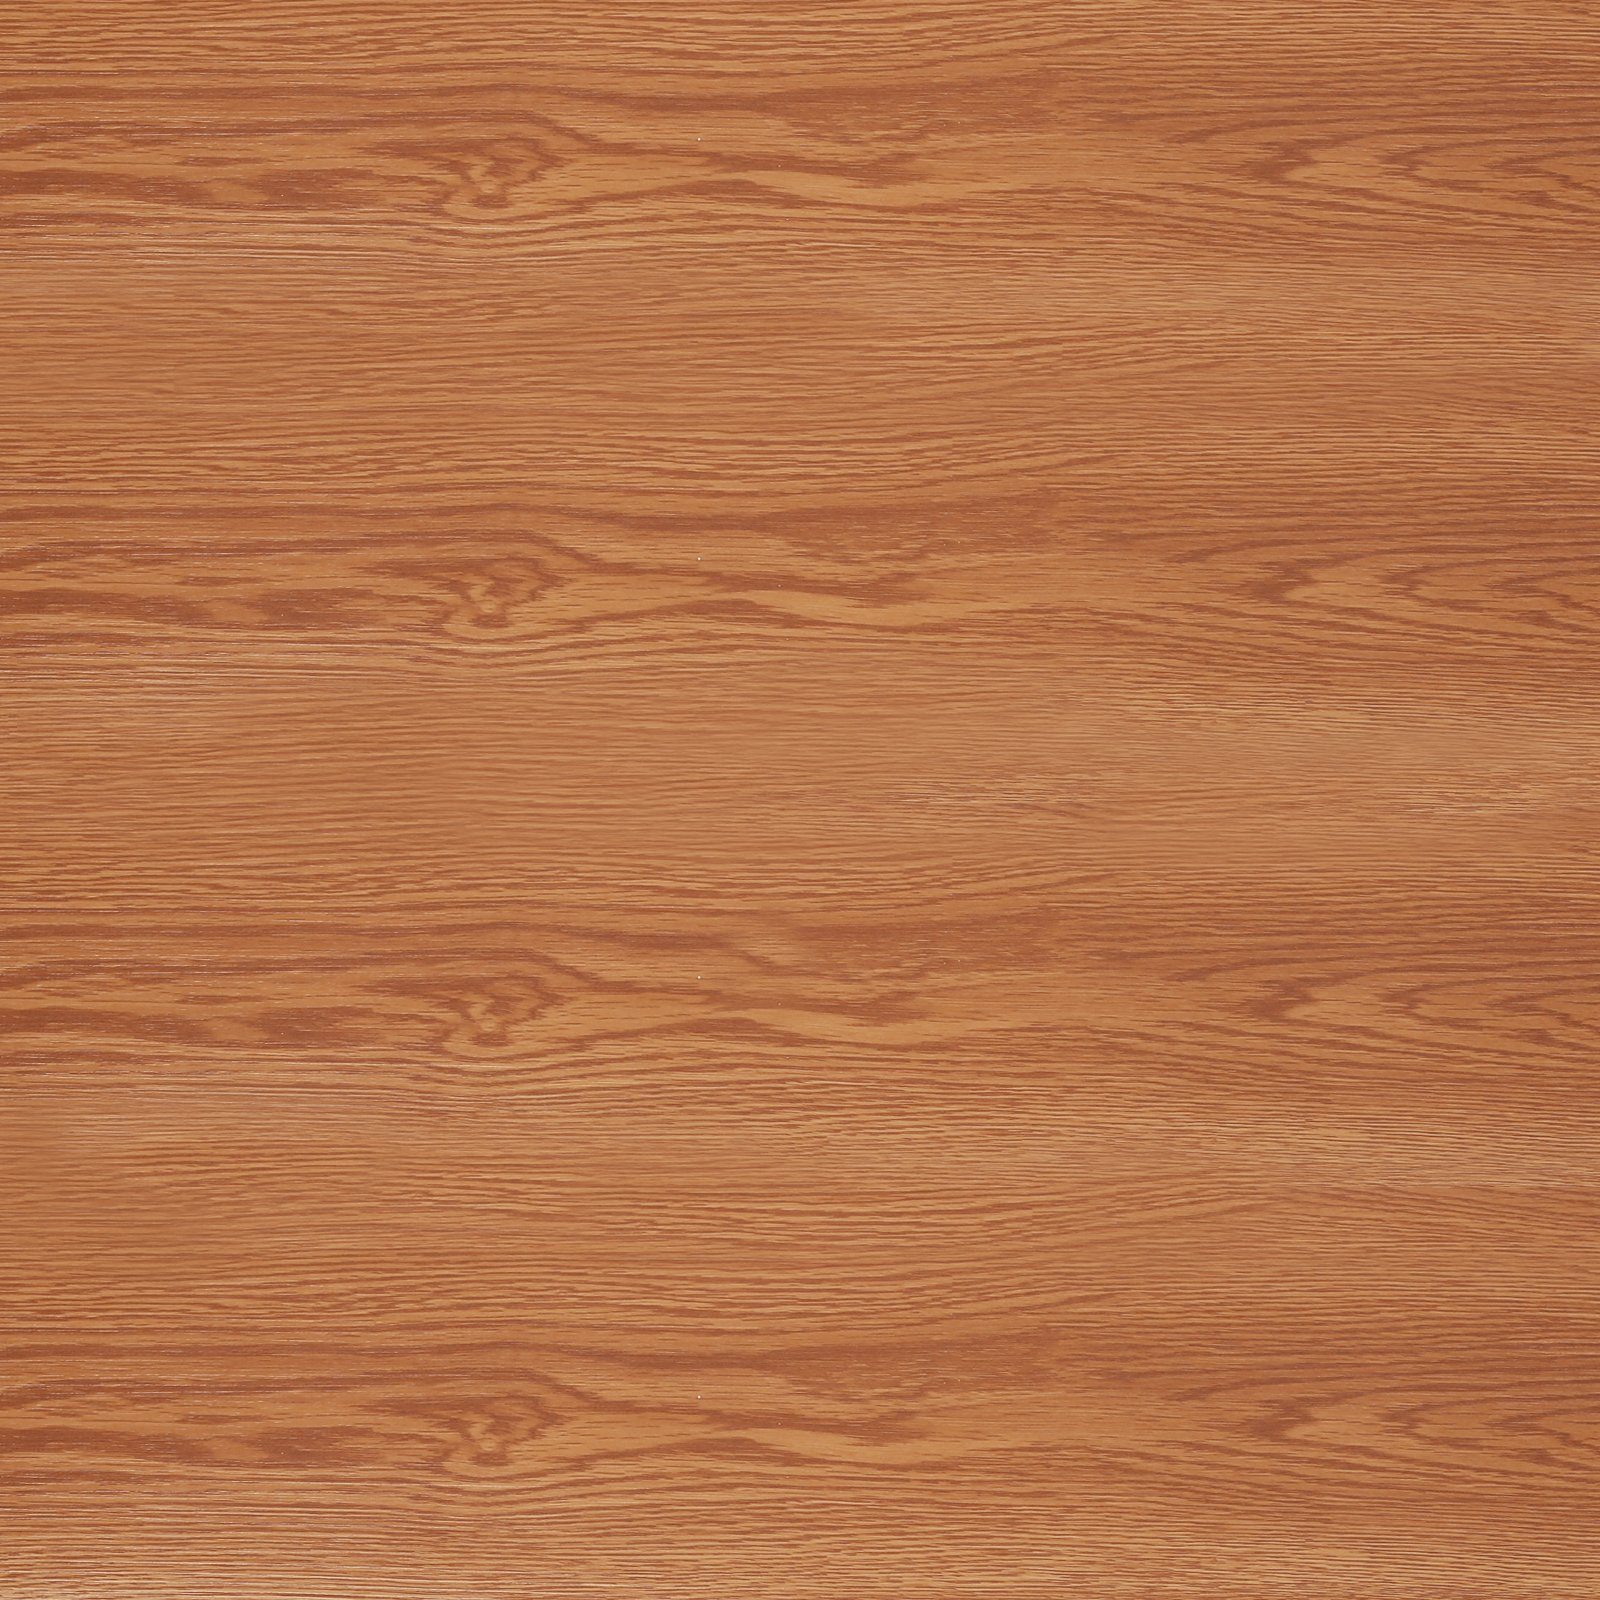 Oak,Classic Vinylboden m² - Clanmacy Warm 10 PVC m²,selbstklebend,White selbstklebend Oak, Planke «ca.1 Oak,Night